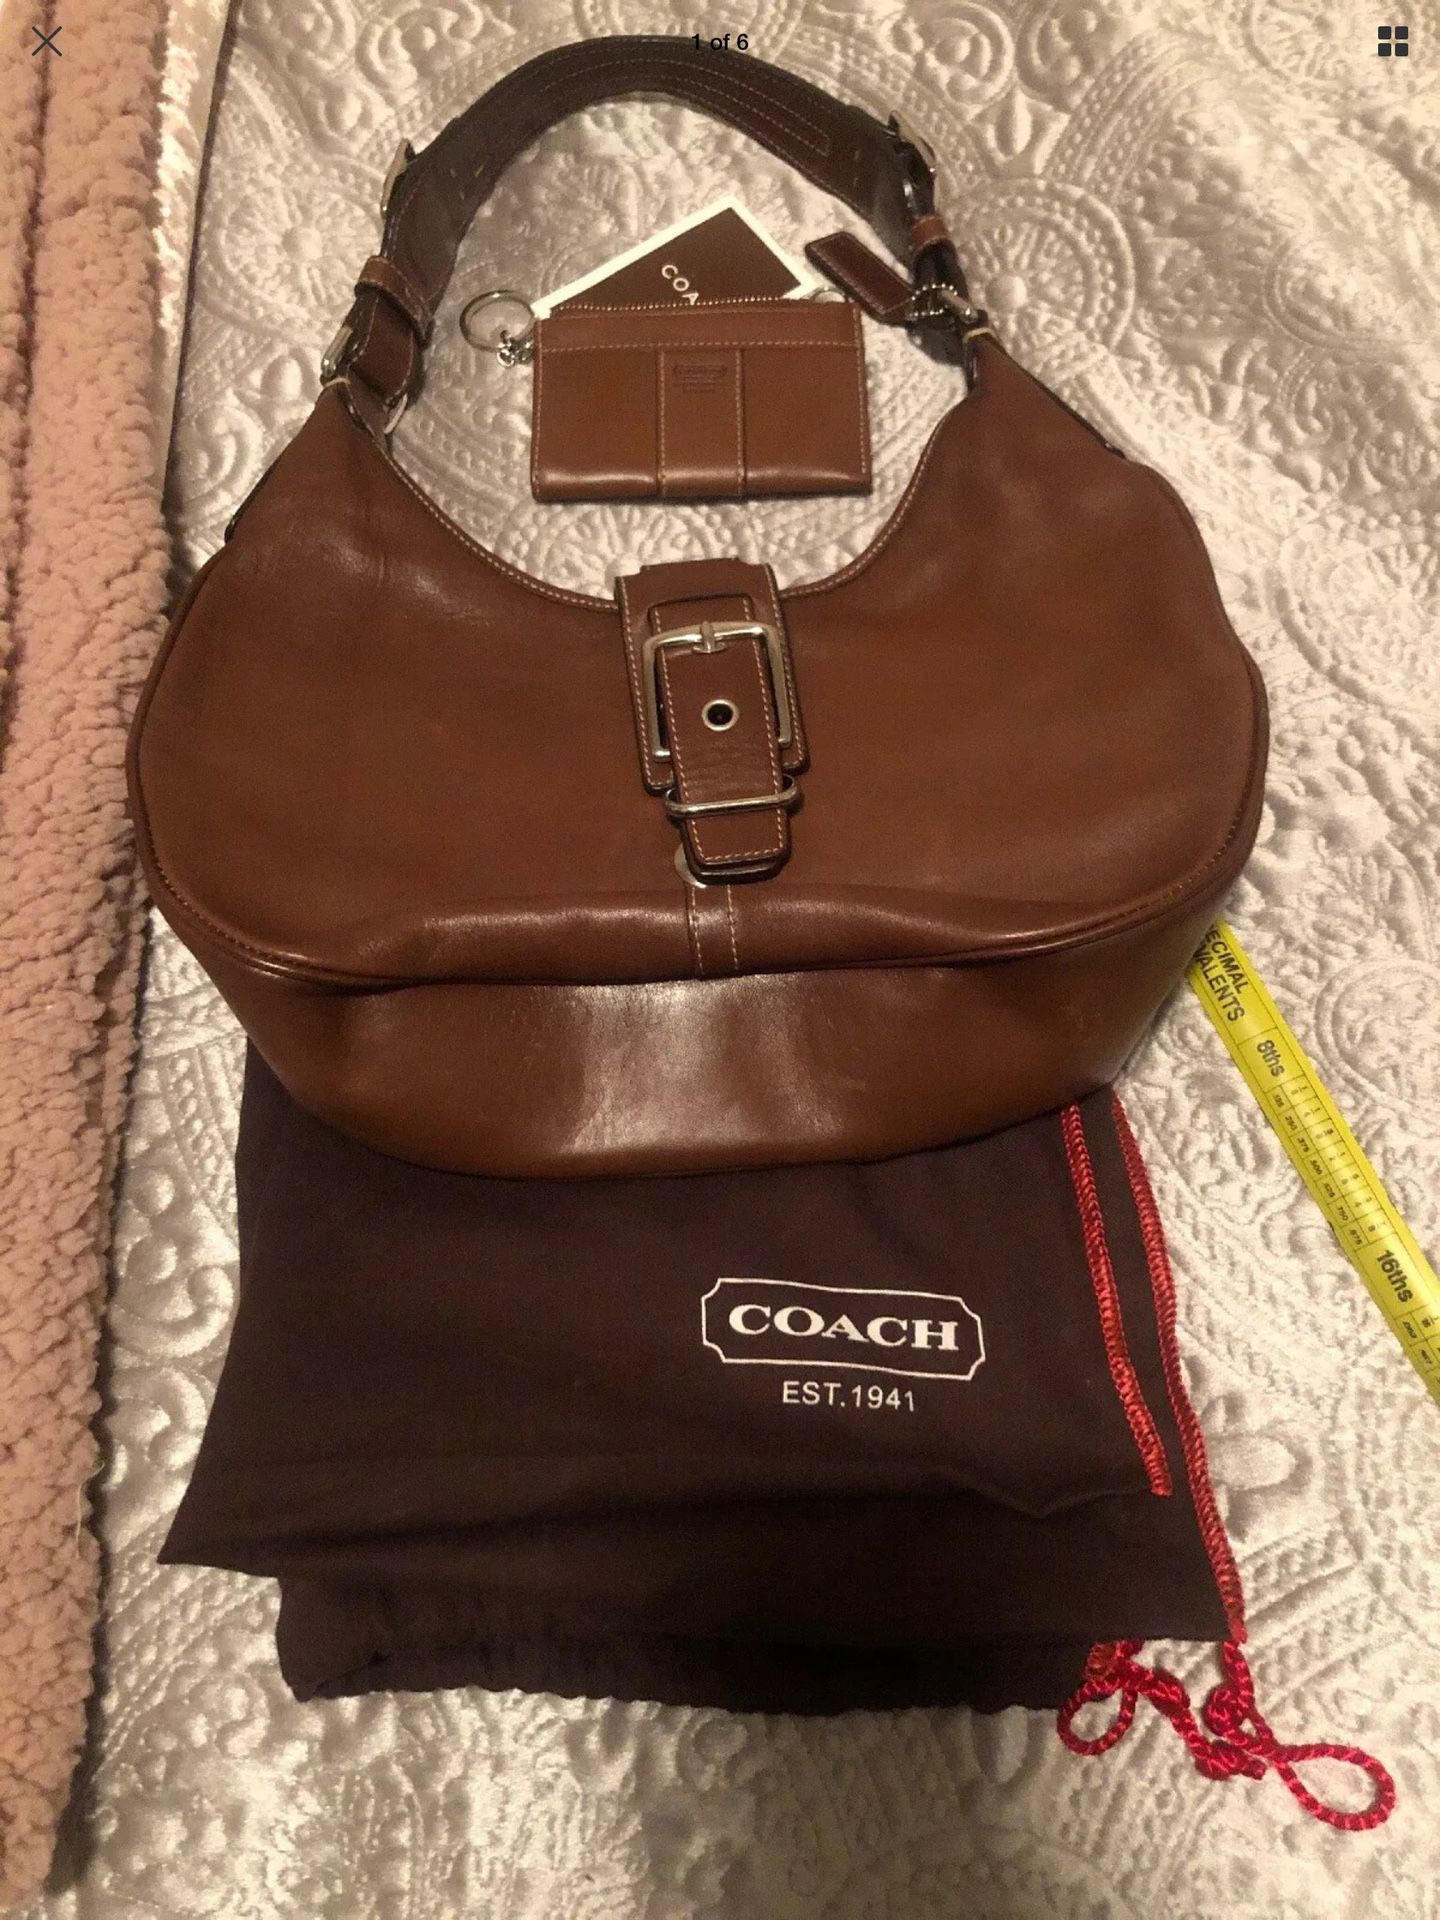 Leather coach hobo bag